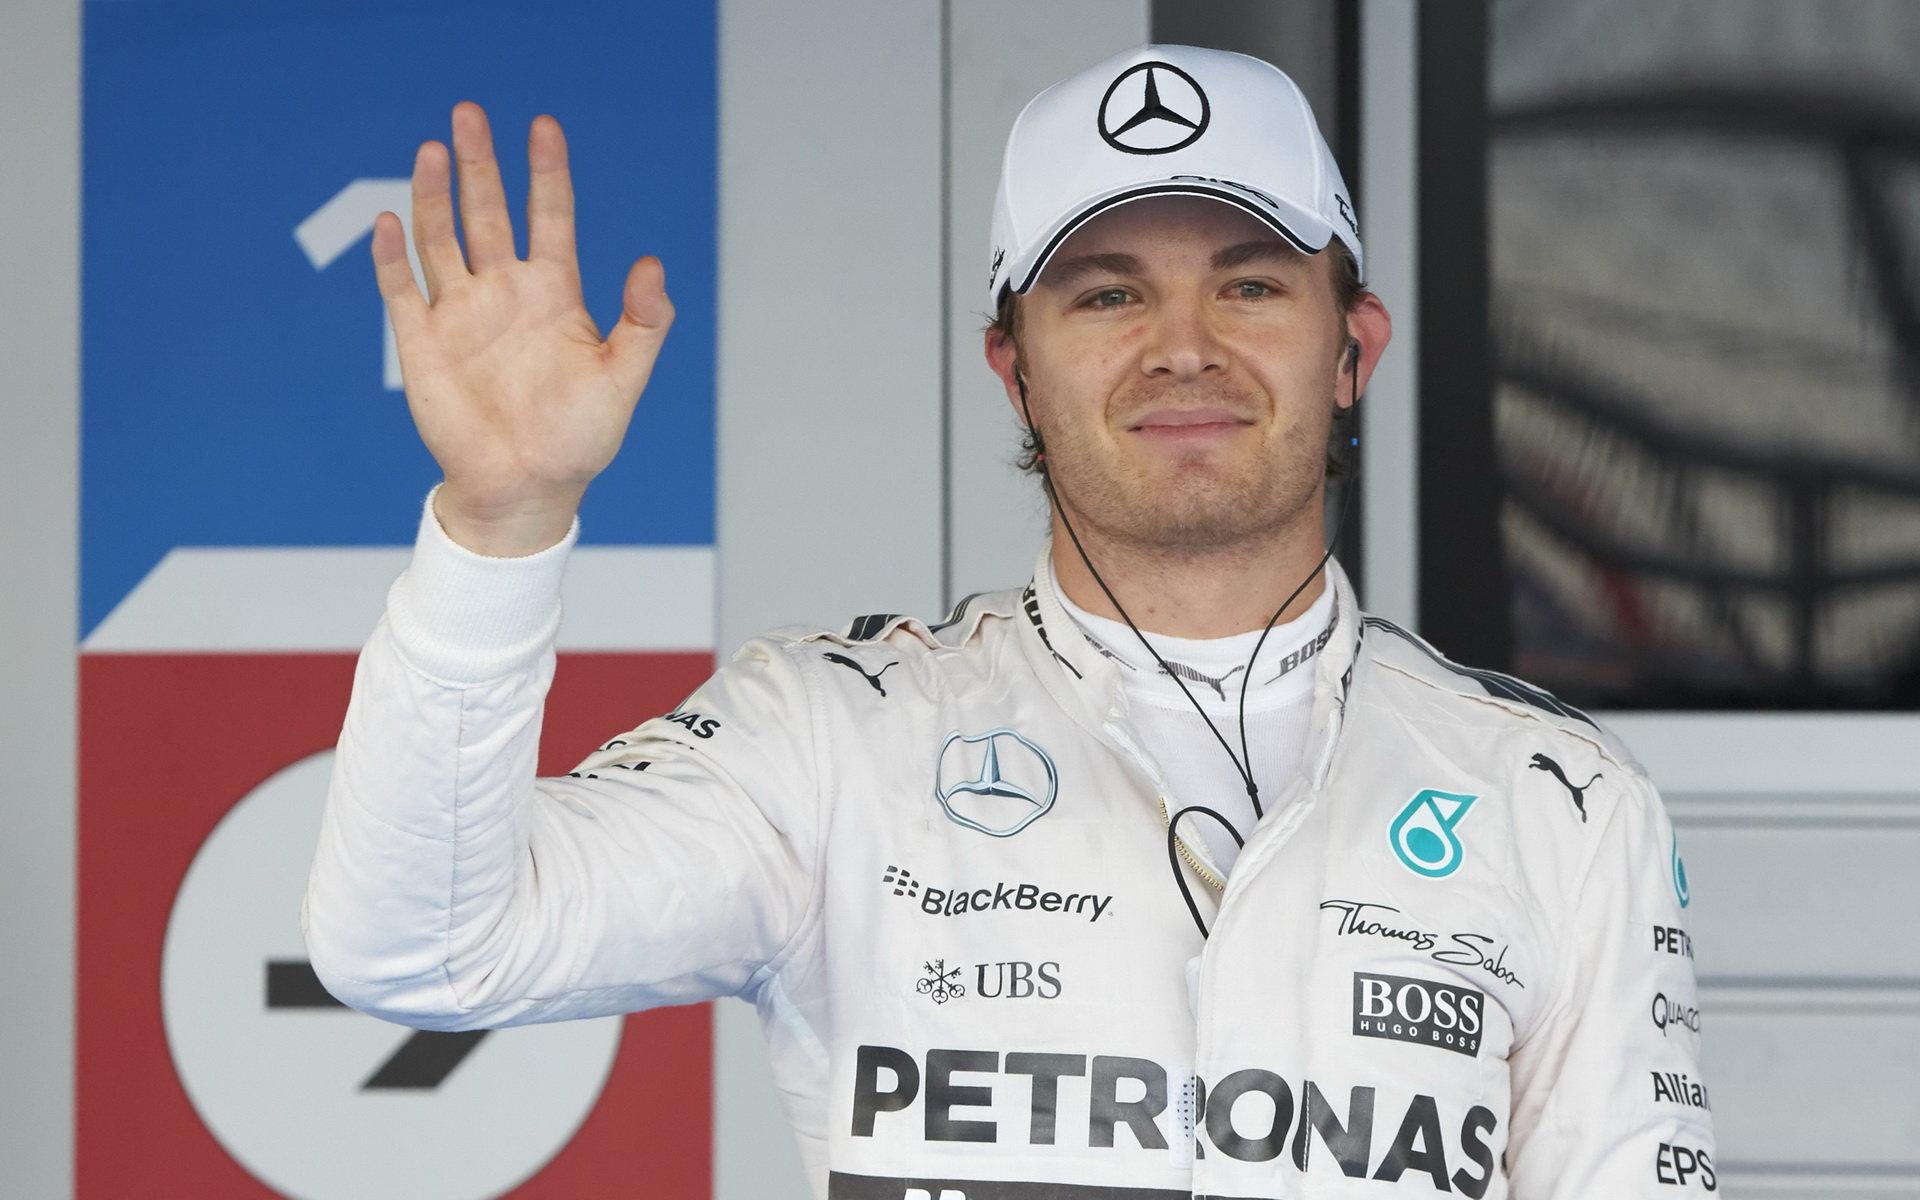 Nico Rosberg je spokojen po vydařené kvalifikaci v Soči